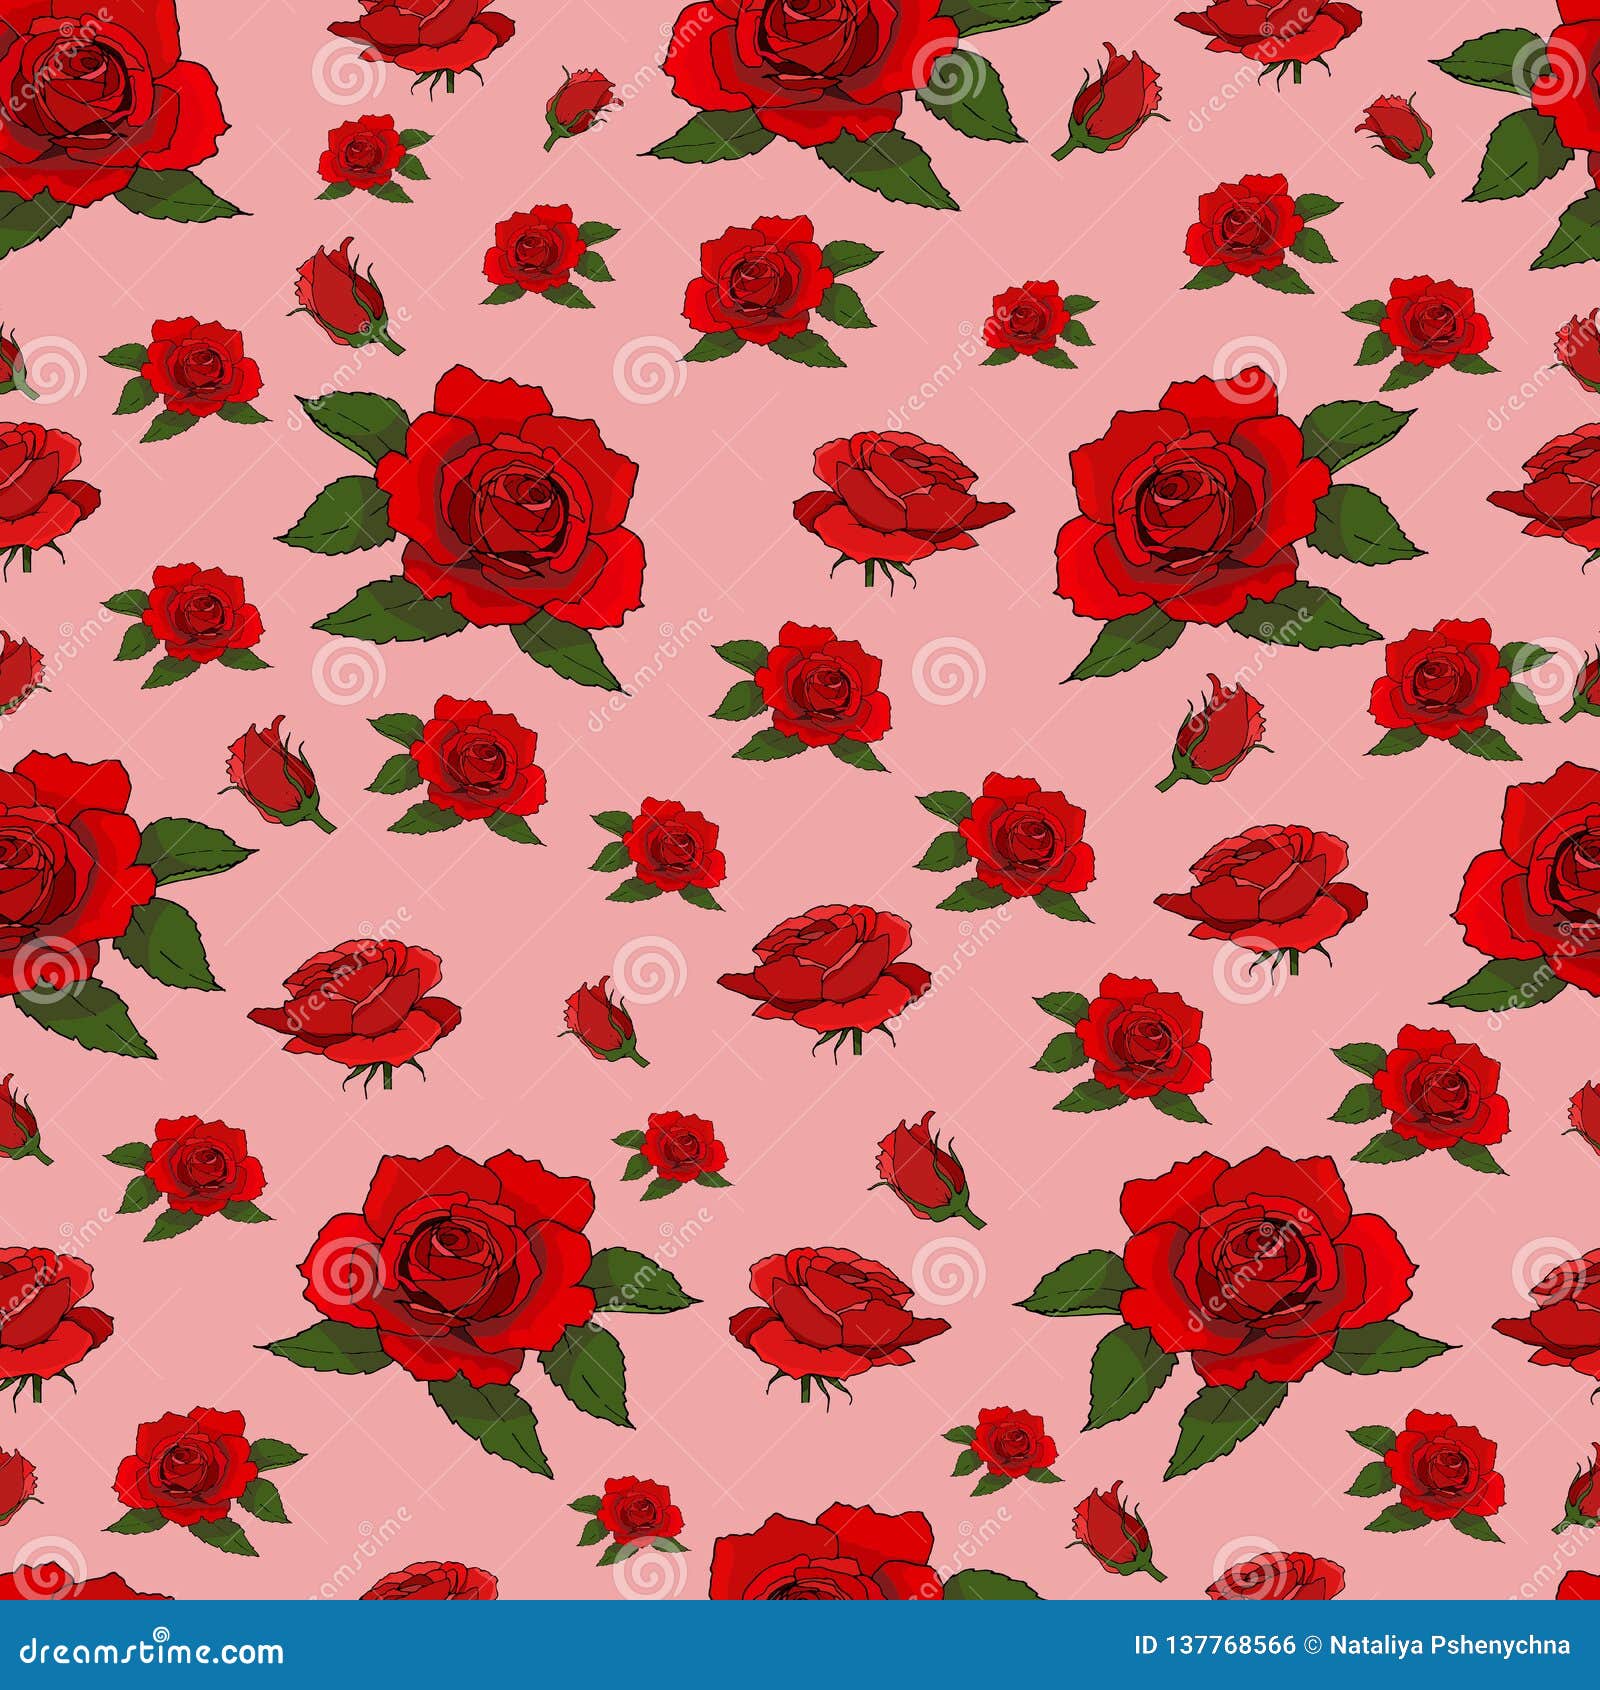 Red roses seamless pattern stock illustration. Illustration of seamless ...